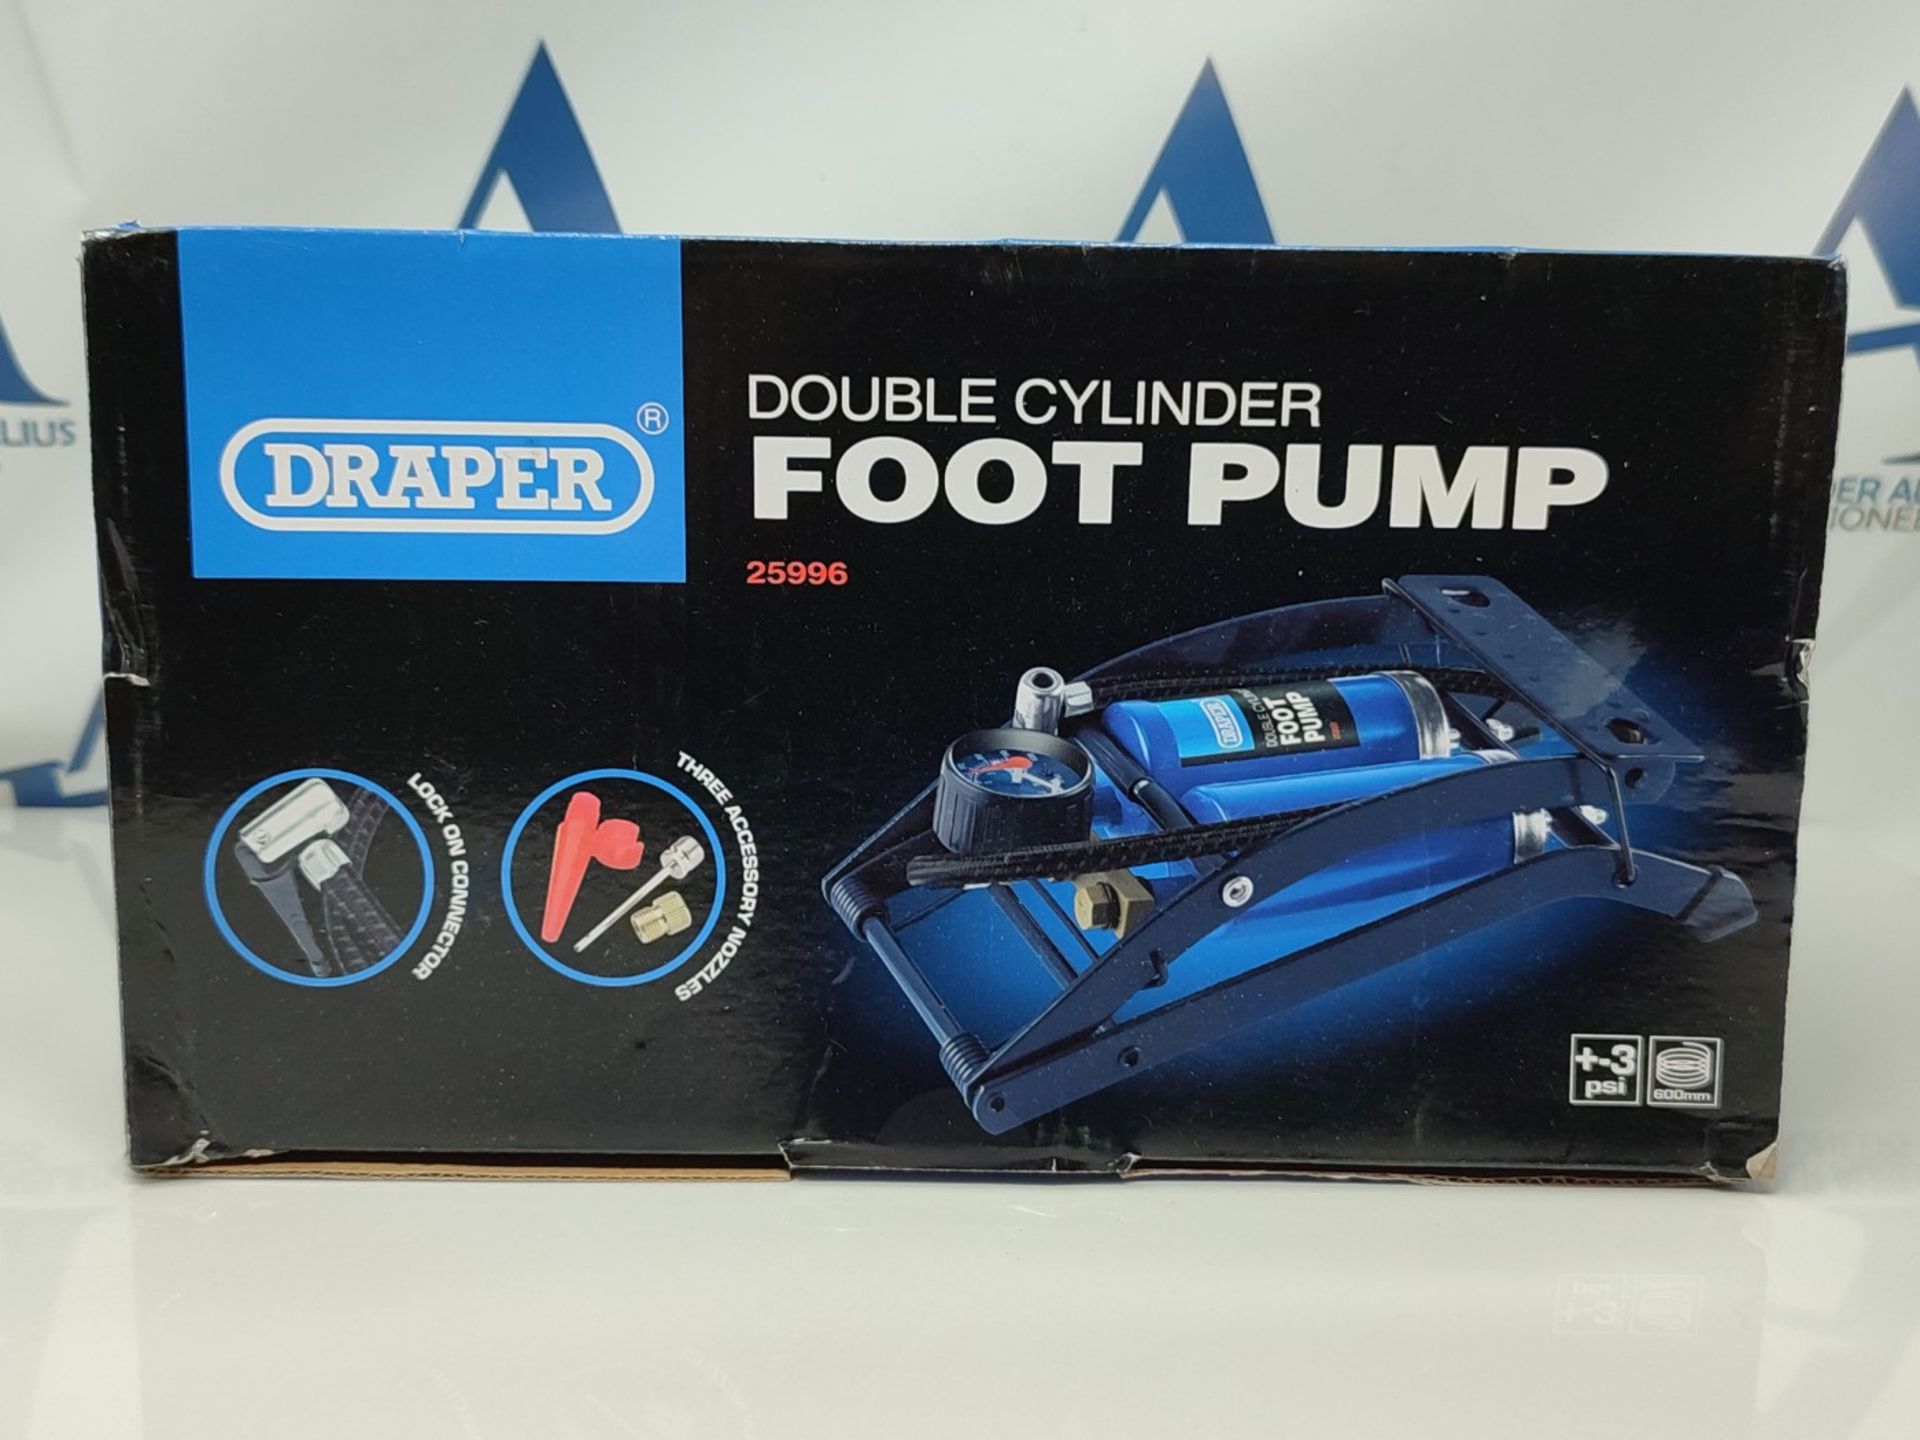 Draper Double-Cylinder Foot Pump with Pressure Gauge & Accessories - 25996 - Manual In - Bild 2 aus 3